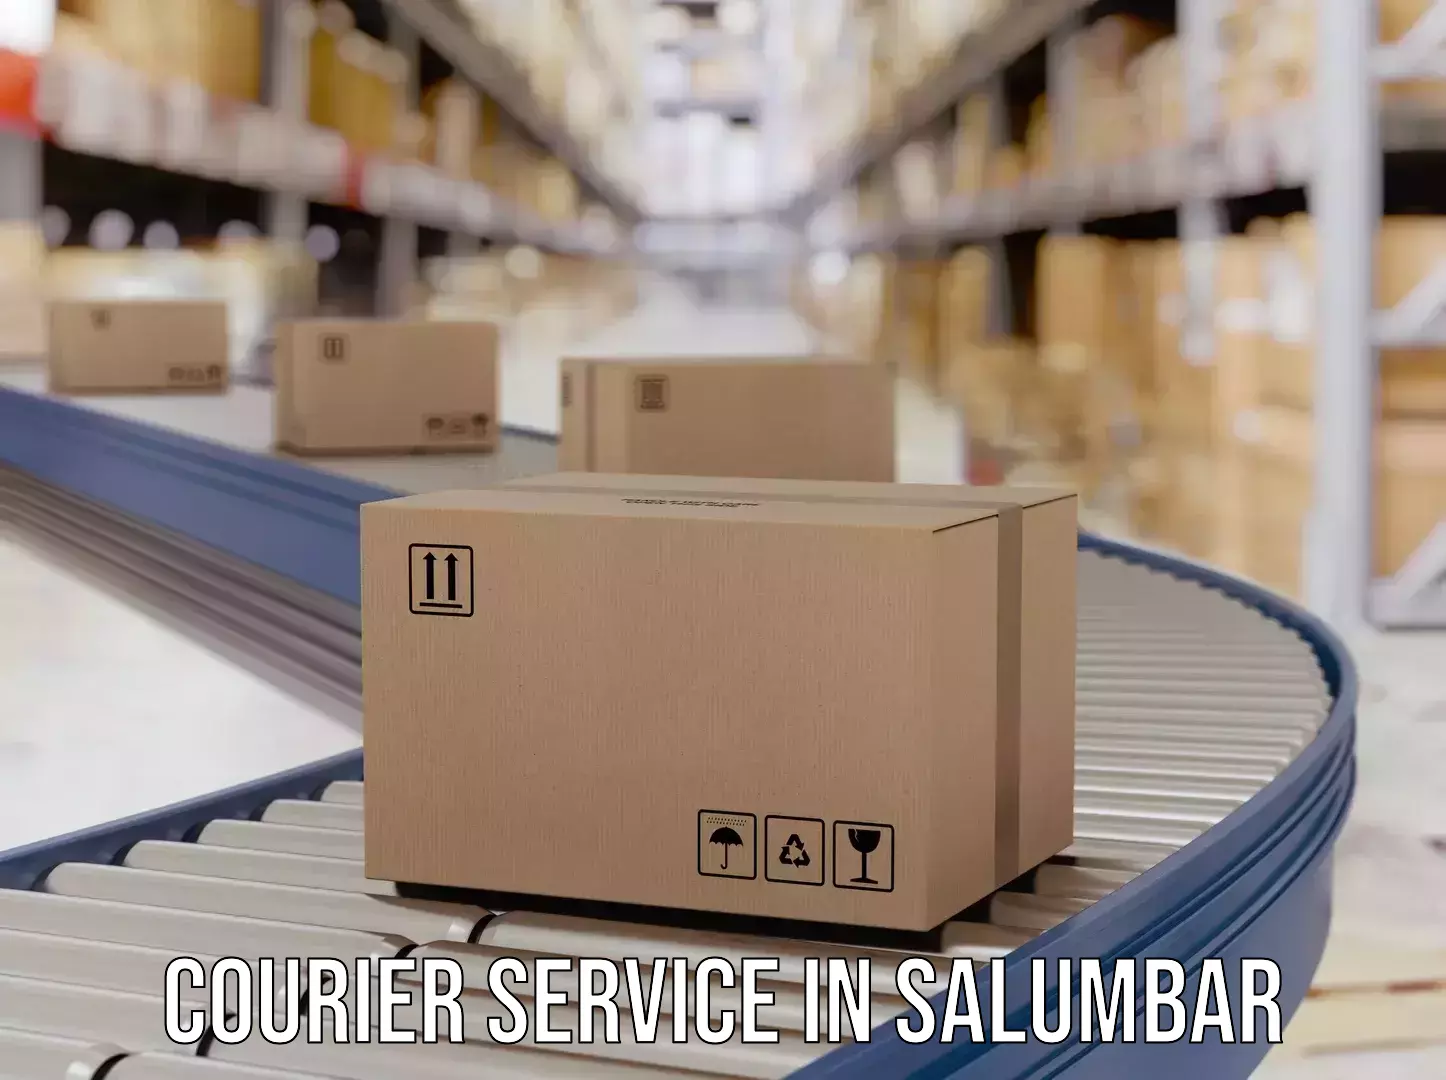 Professional parcel services in Salumbar